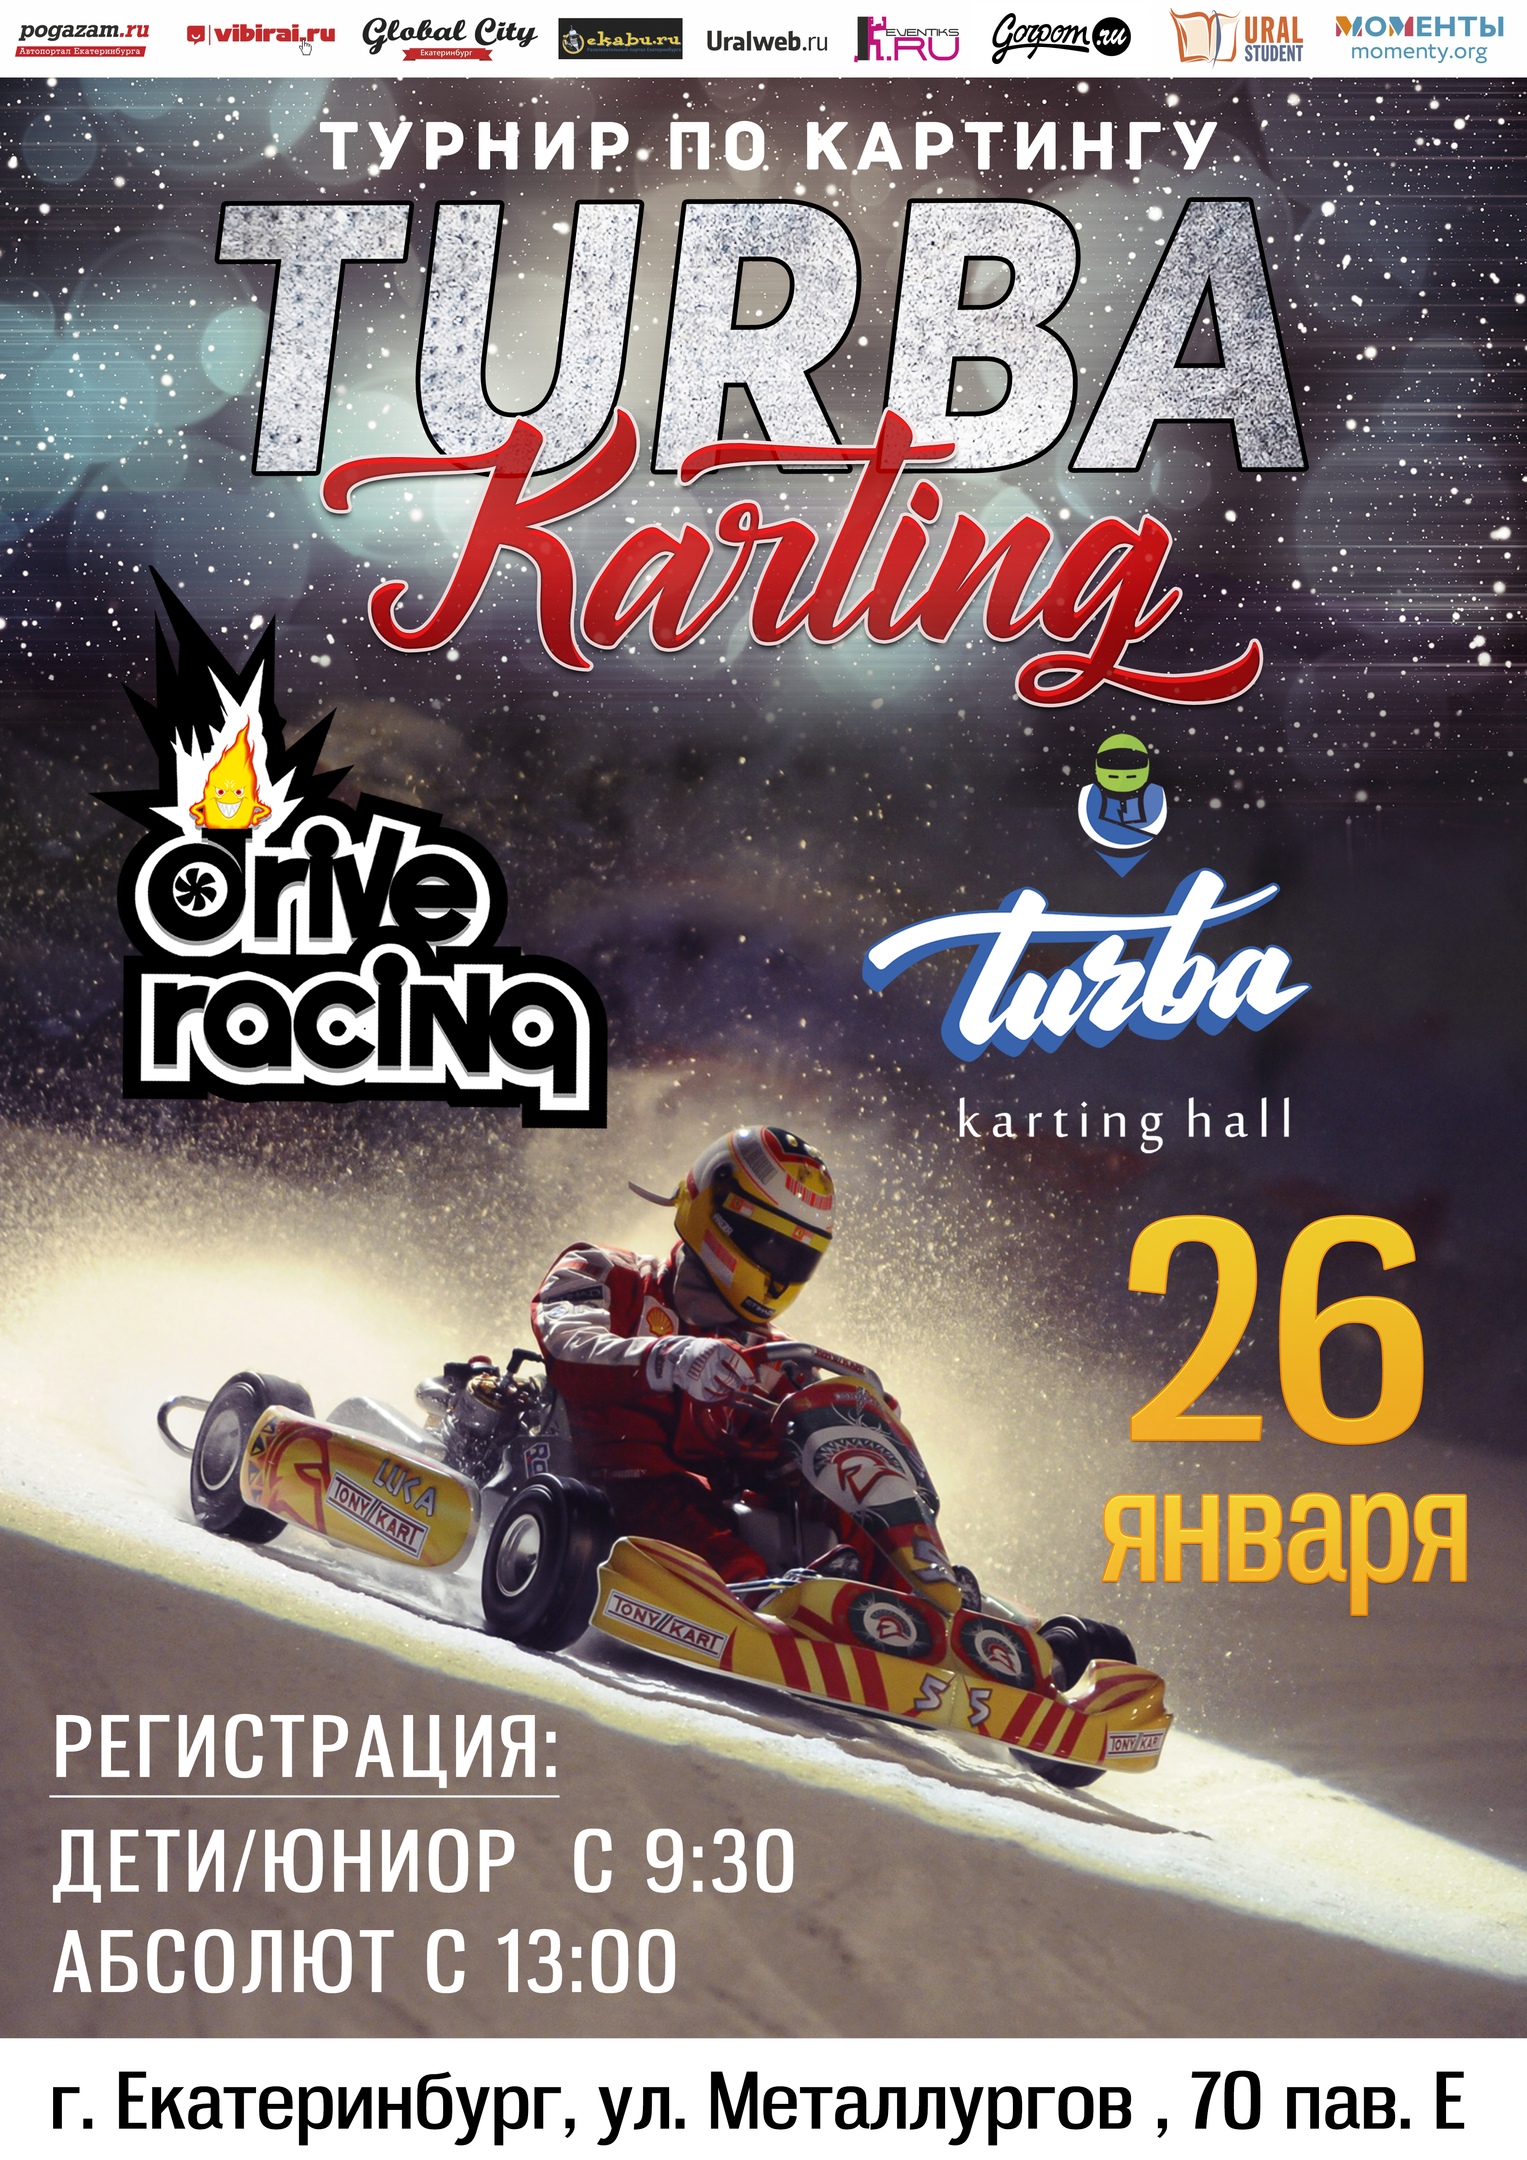 26 января приглашаем на турнир TURBA Karting